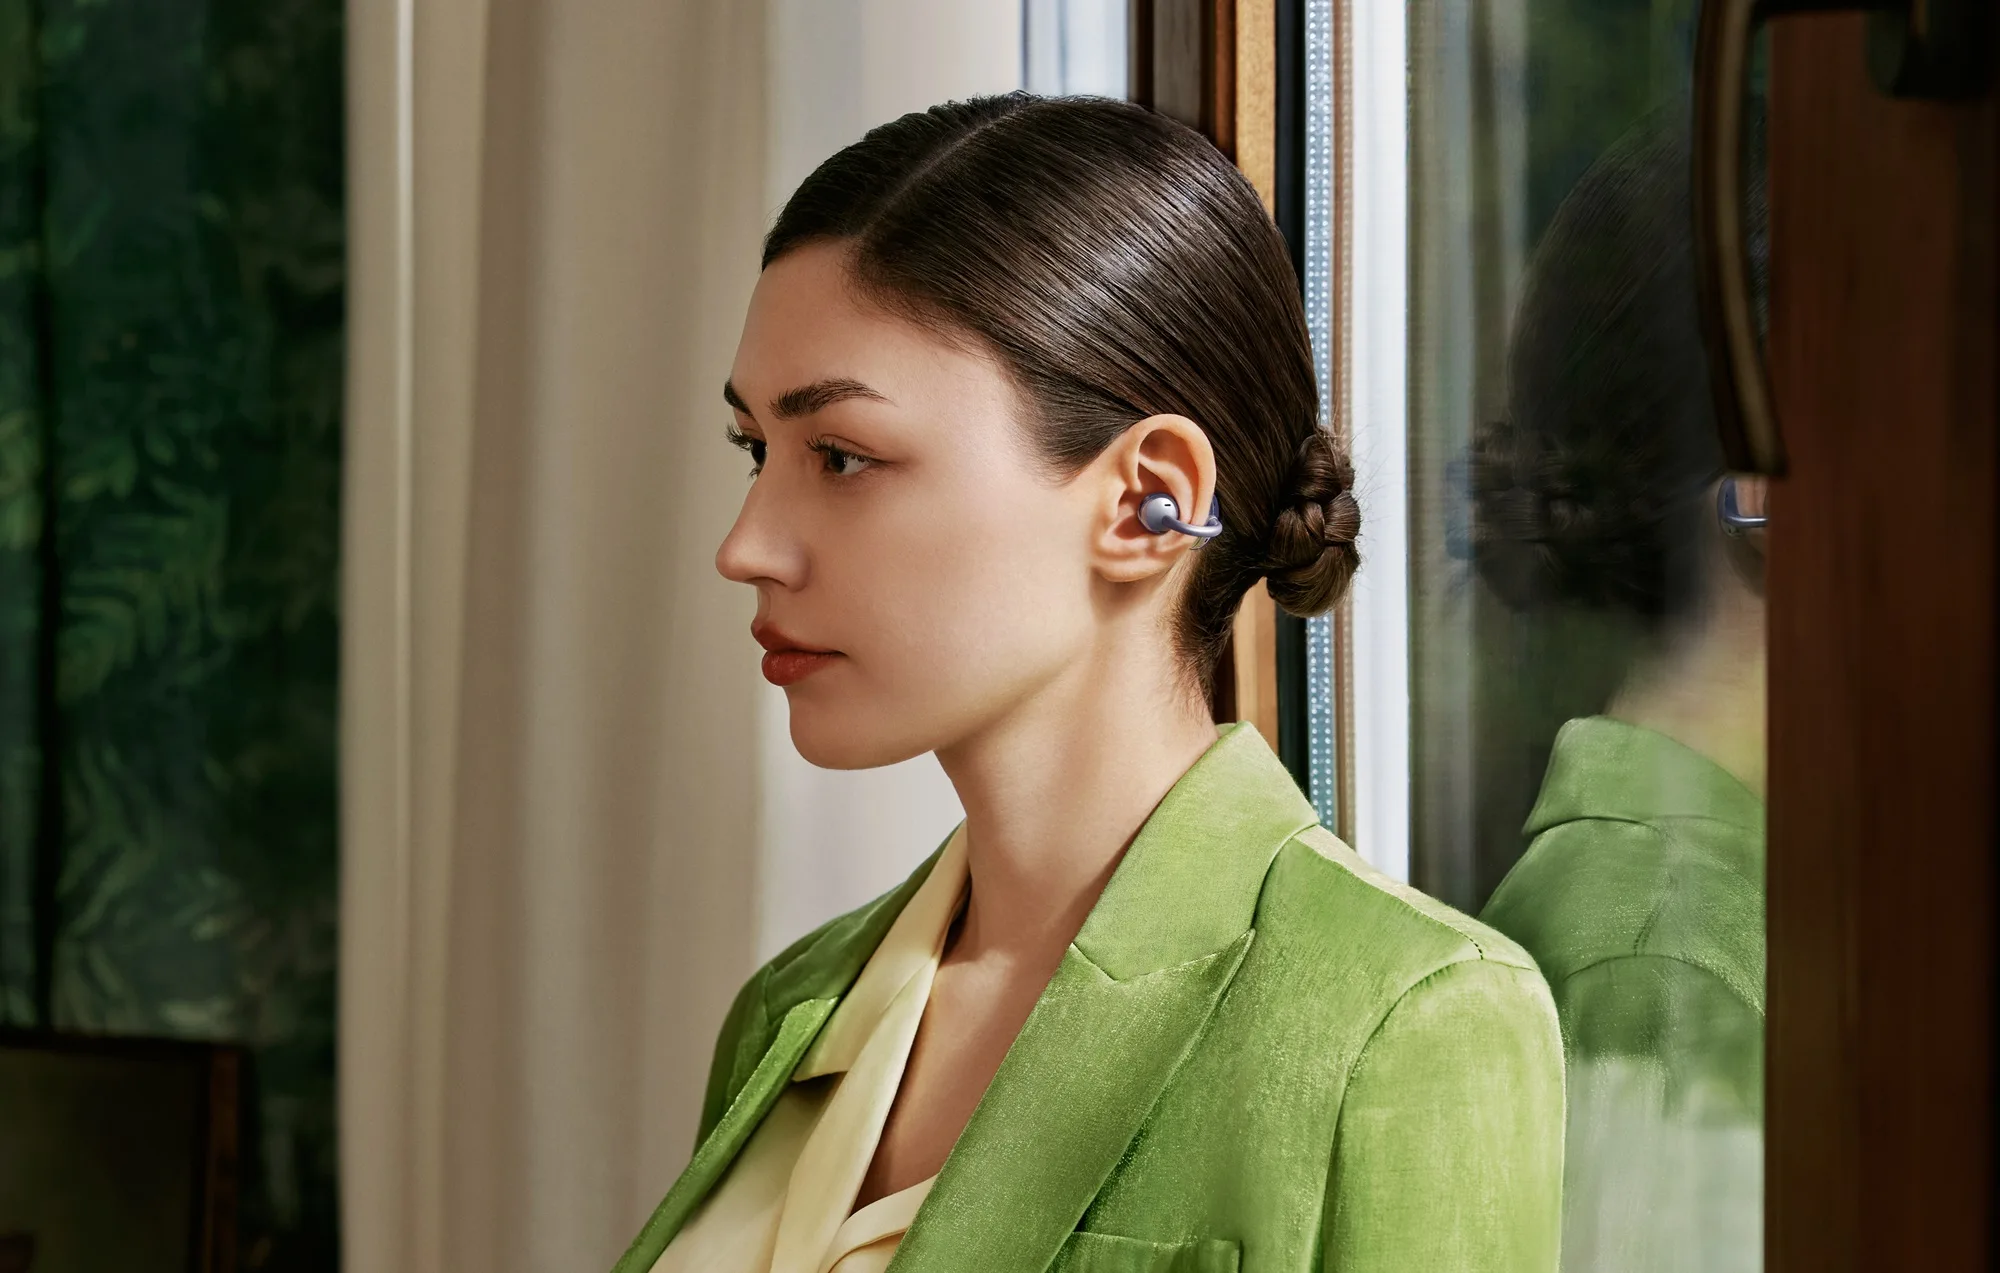 Análisis de Huawei FreeClip: auriculares abiertos con un diseño